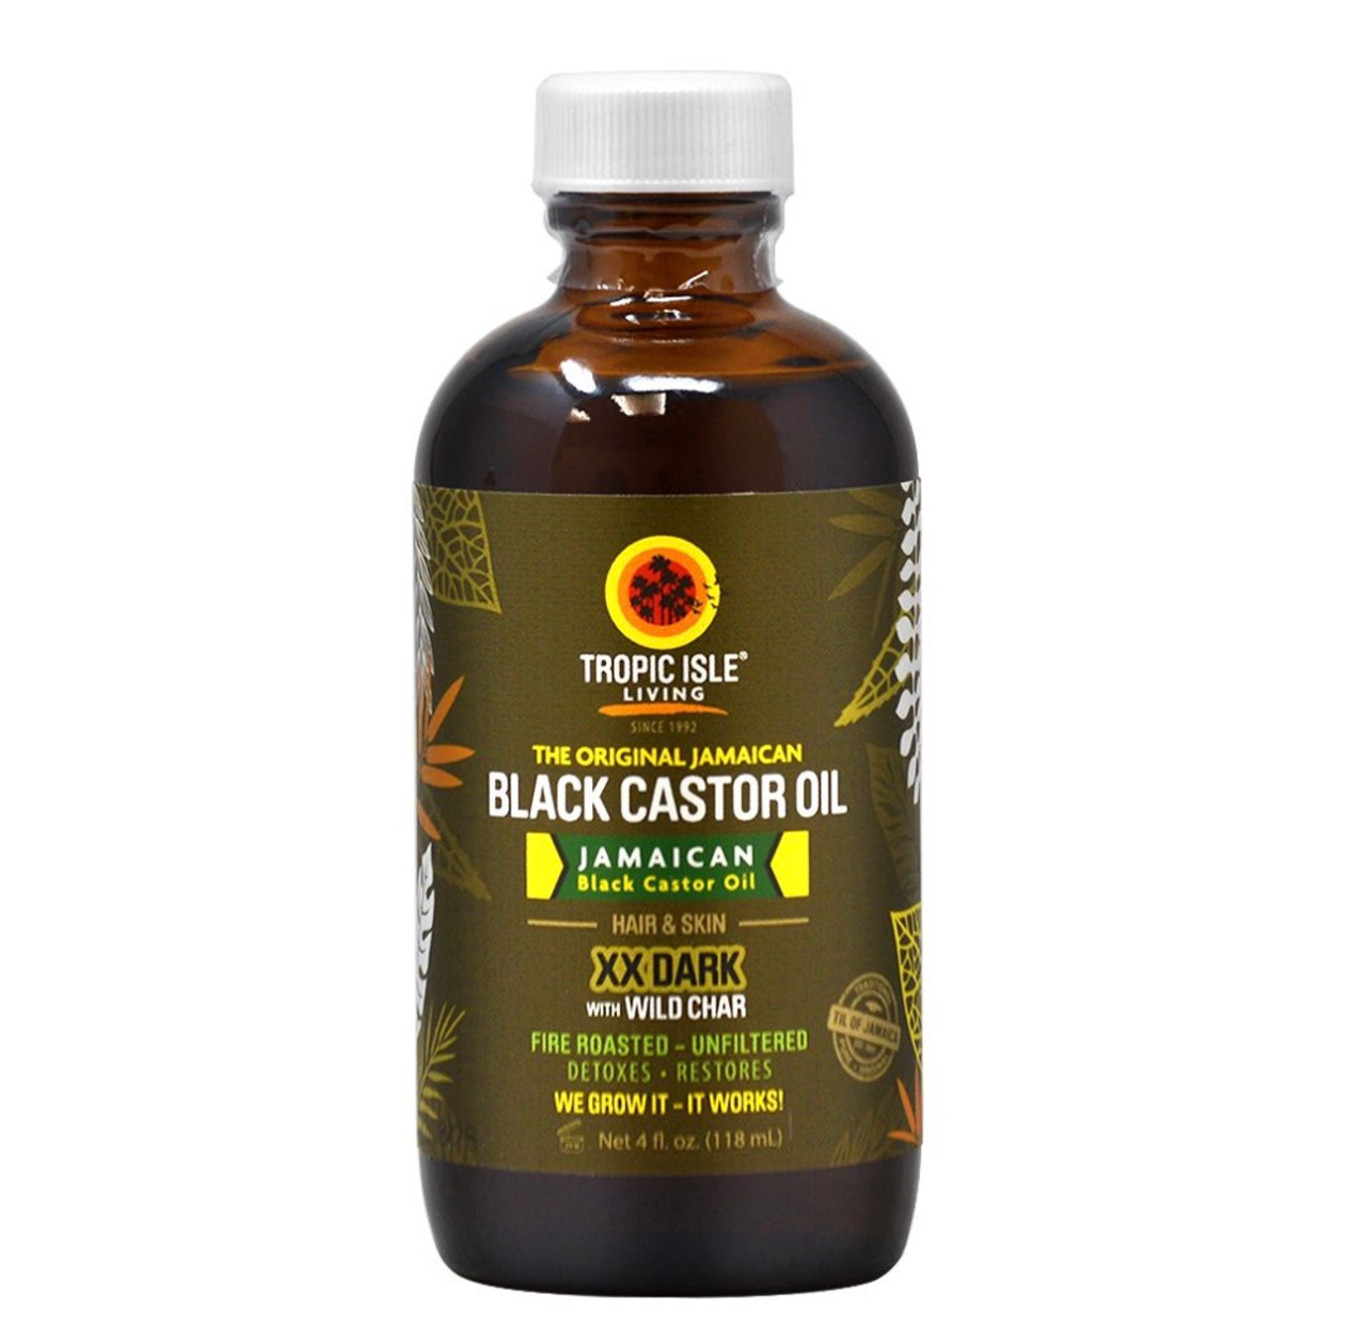 Tropic Isle Living Jamaican Black Castor Oil XX Dark with Wild Char (4 oz)